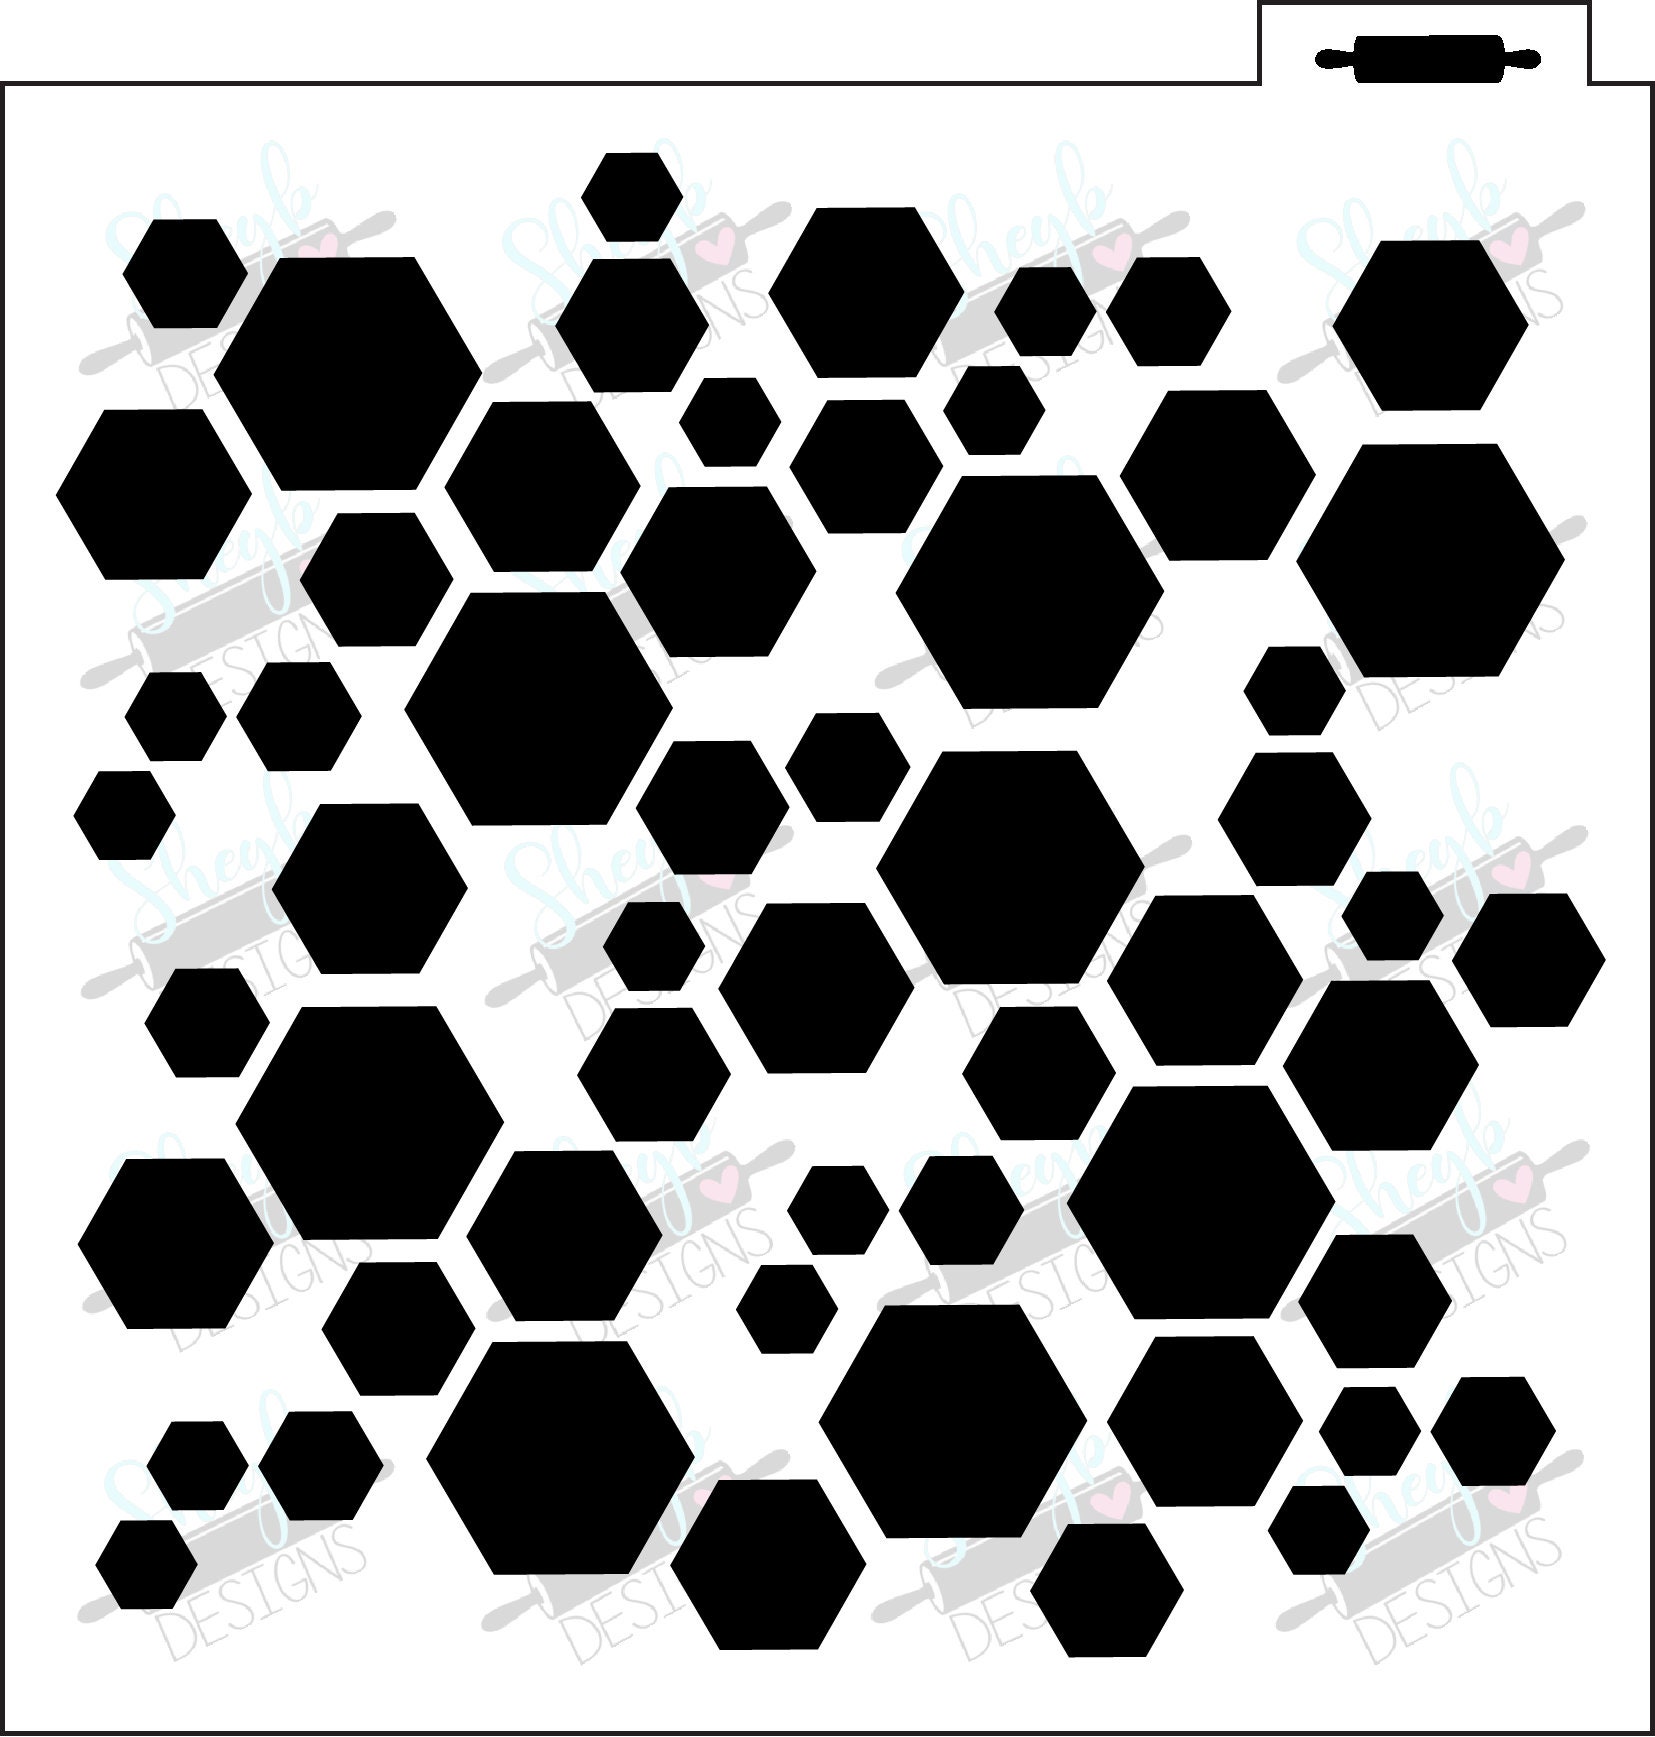 27-00077 RSC Honeycomb Stencil